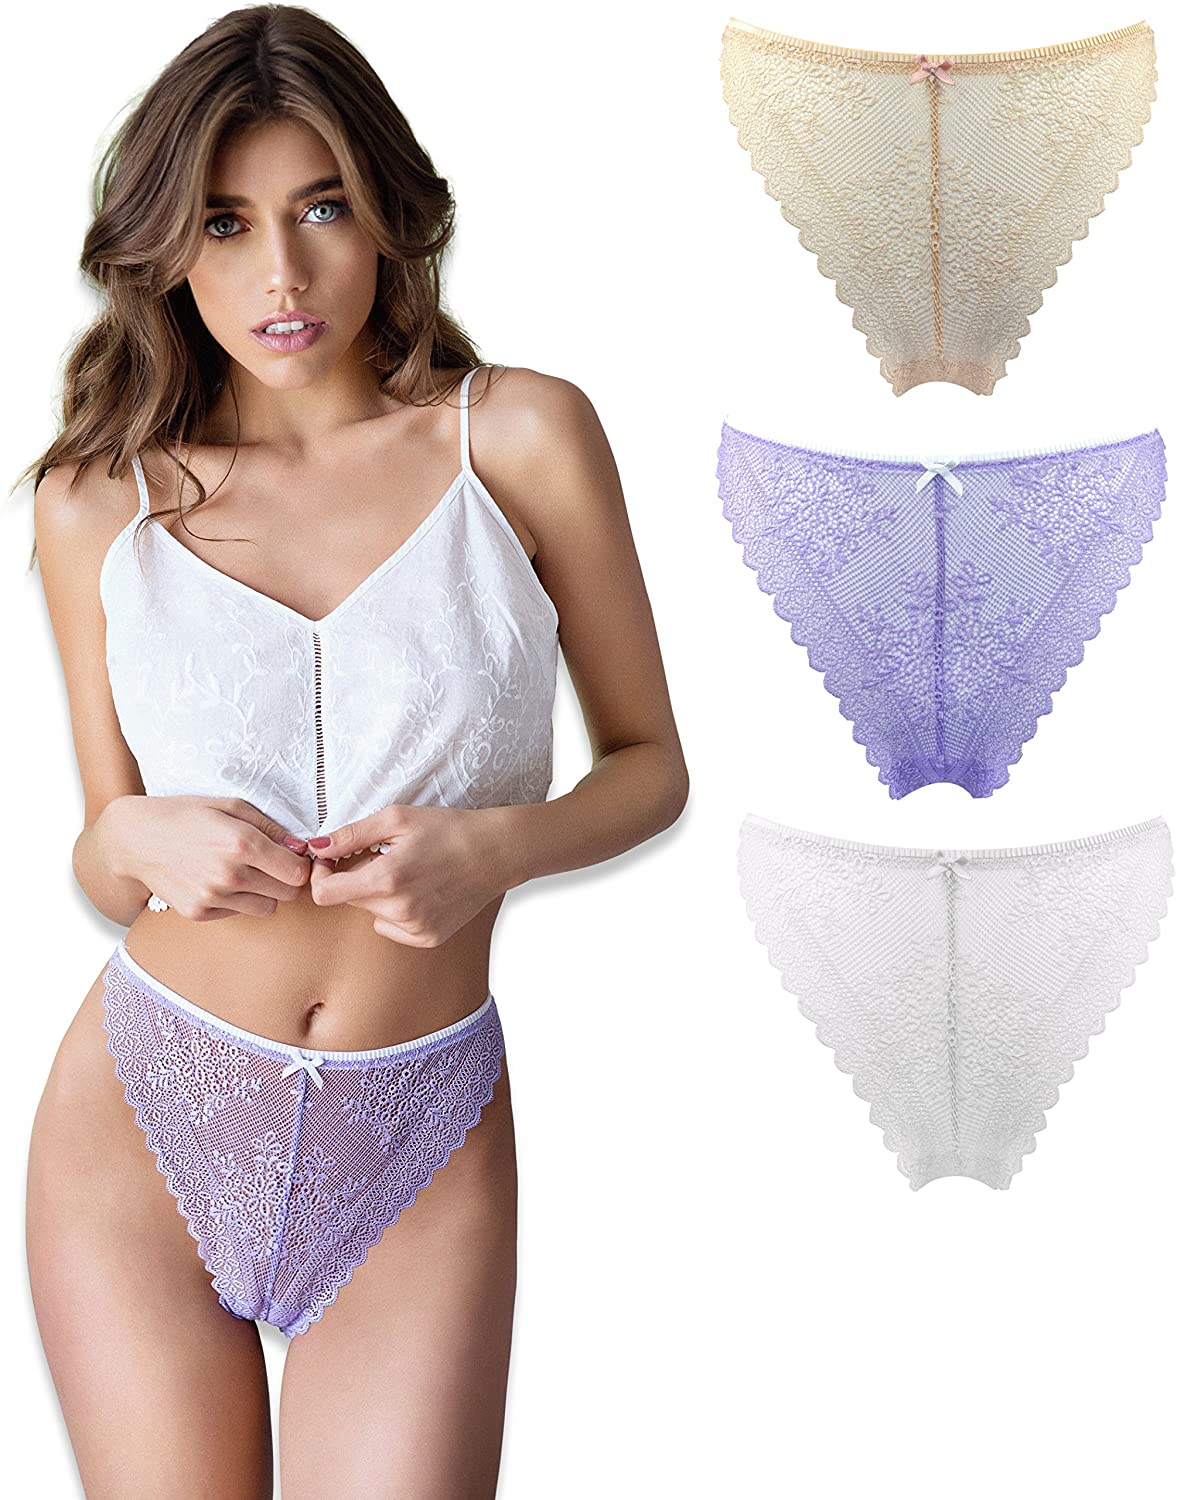 Price:$7.99    Sexy Basics Women's 3 Pack Hi-Leg Brazilian Thong Lace Panties Active Underwear  Clothing